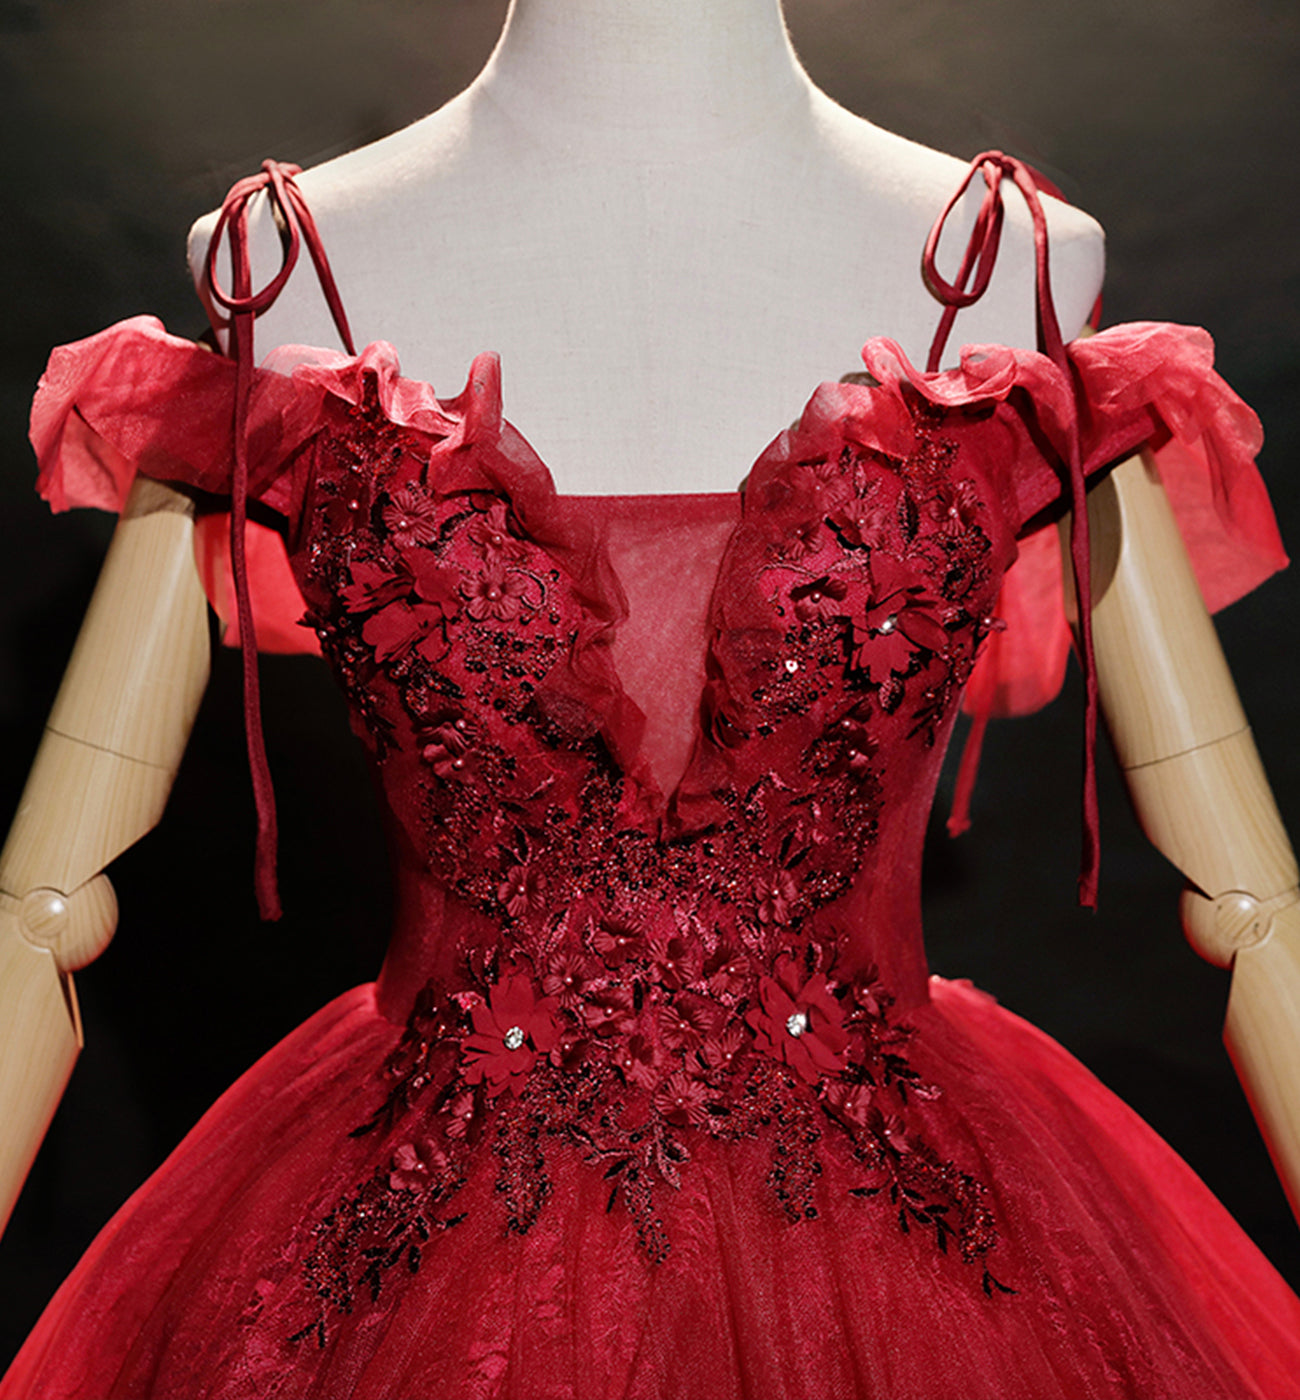 Burgundy lace long ball gown dress formal dress  8618